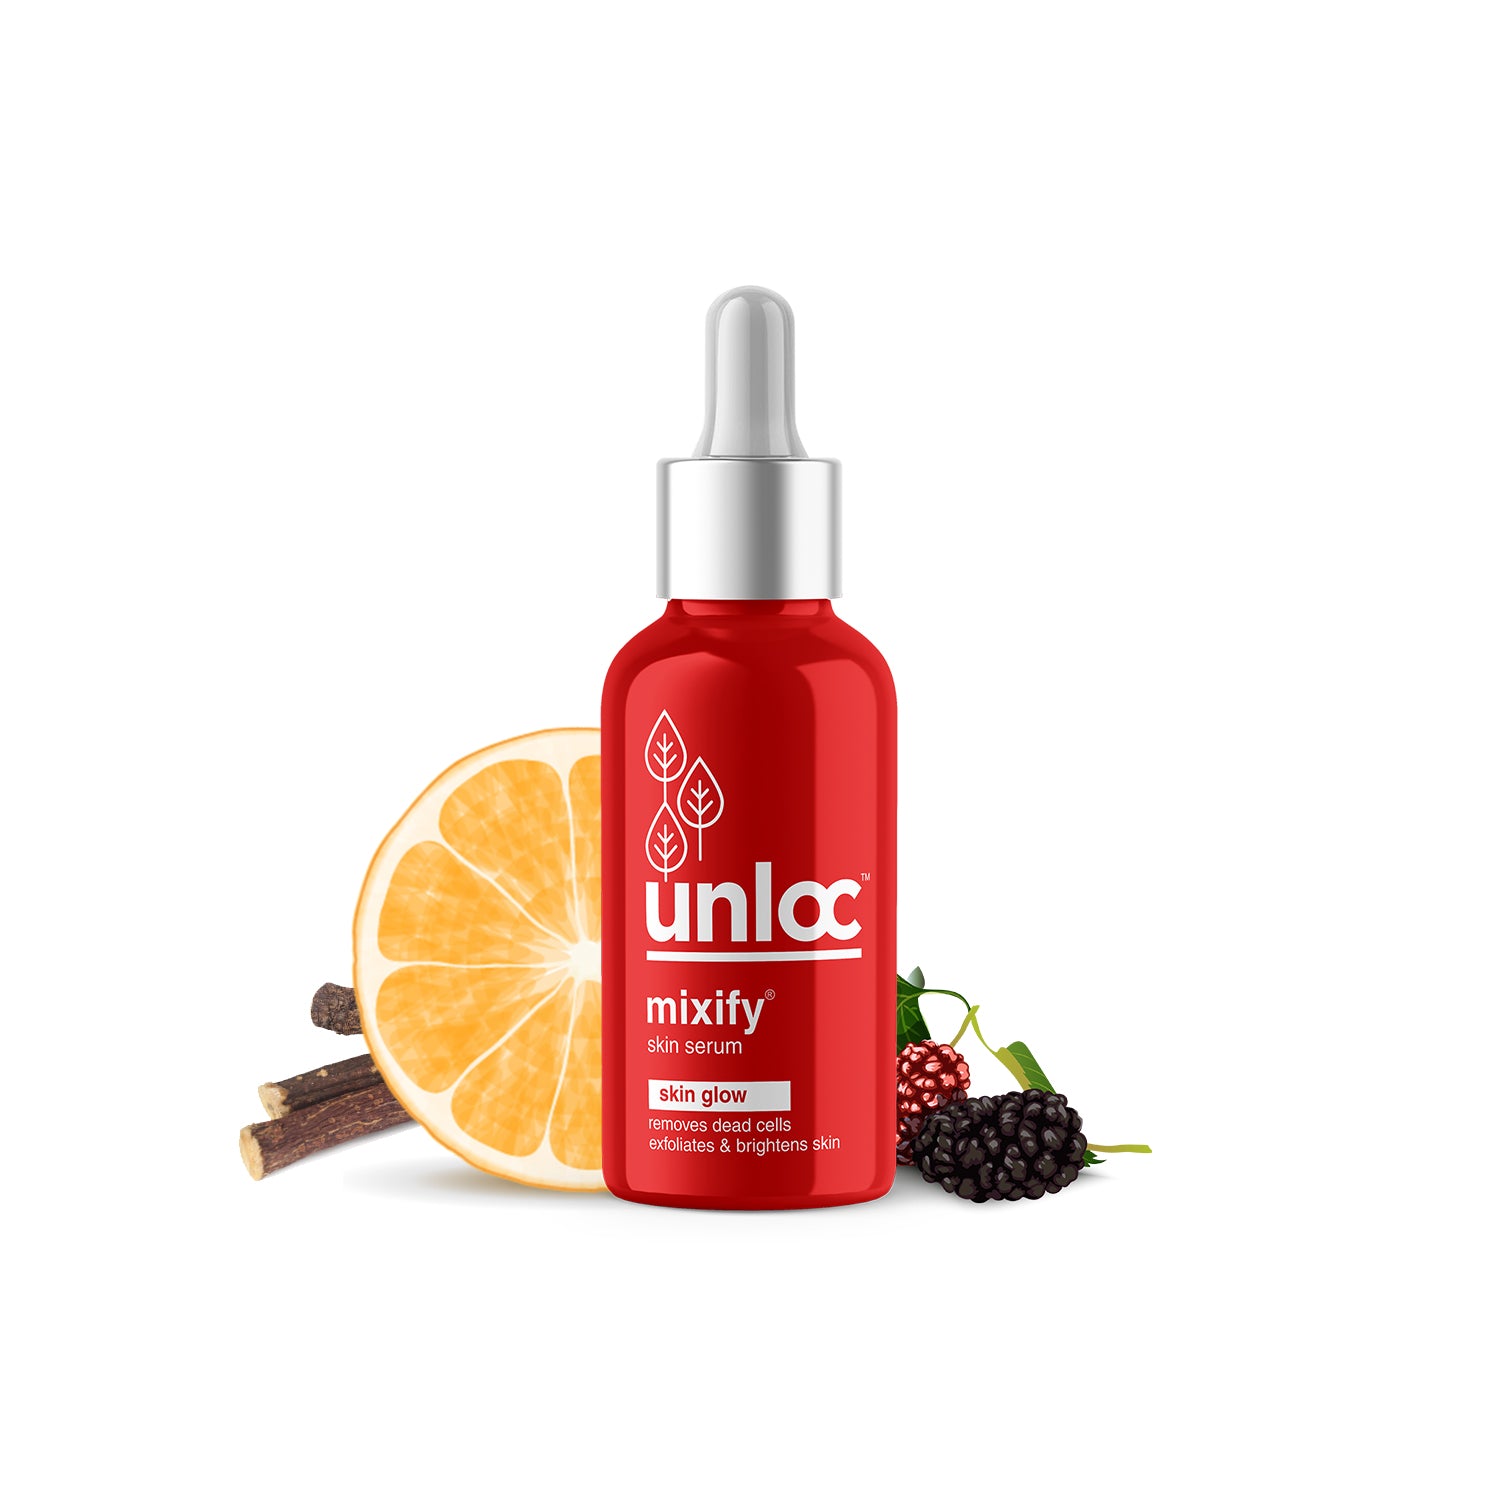 Unloc Mixify Skin Glow Face Serum - 30ml